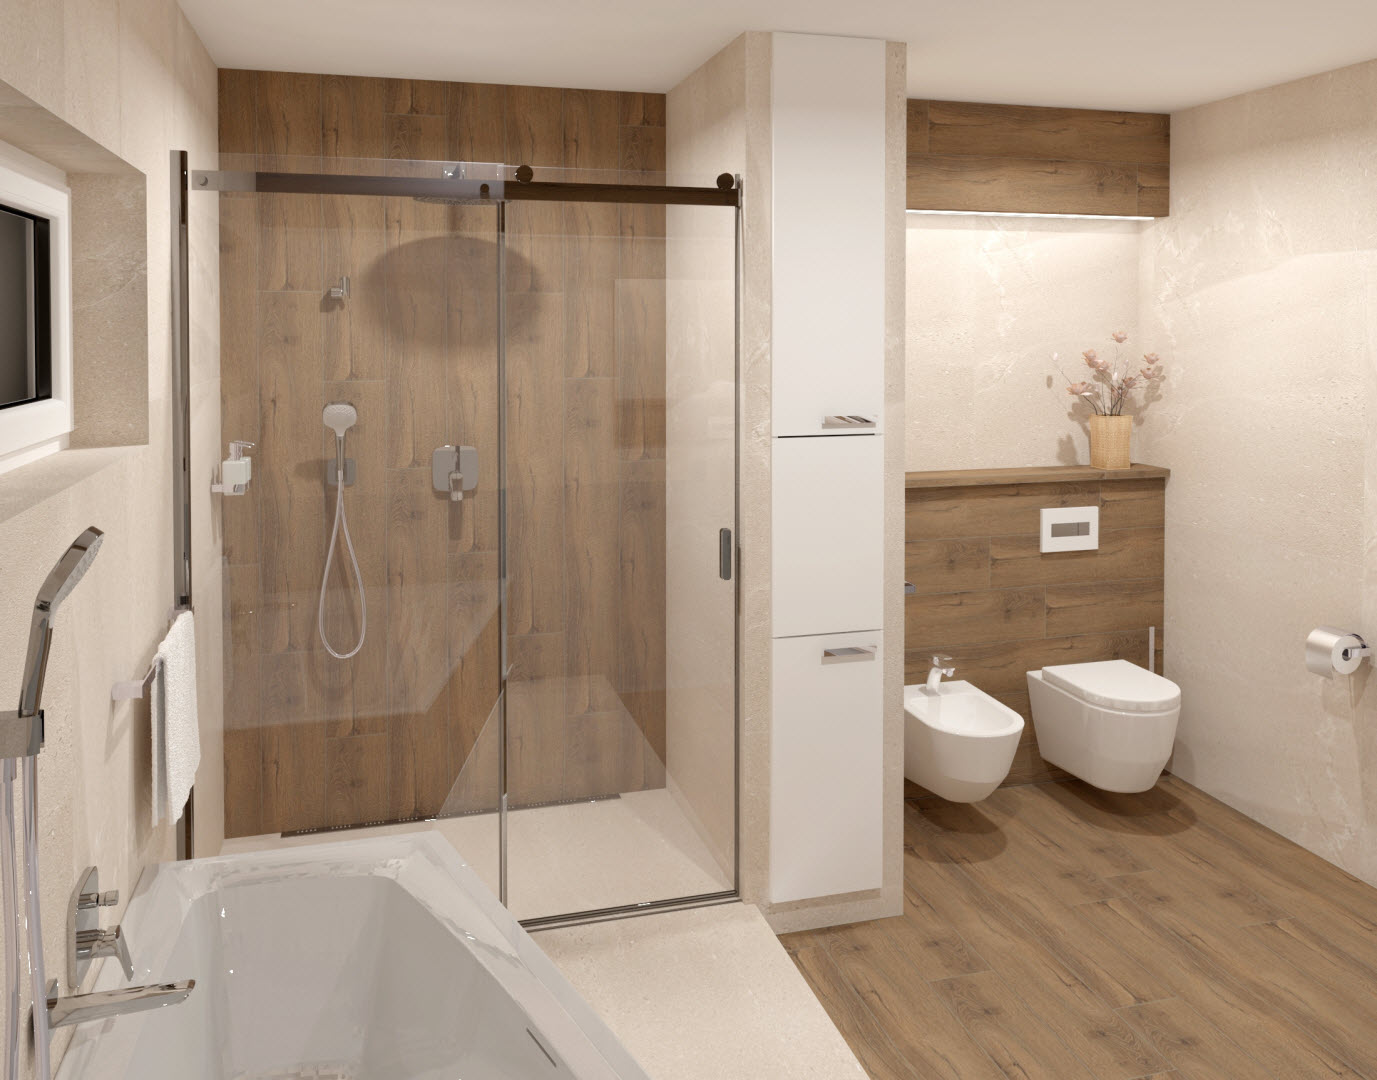 Vizualizace koupelny ze série Planches de Rex v designu dřeva